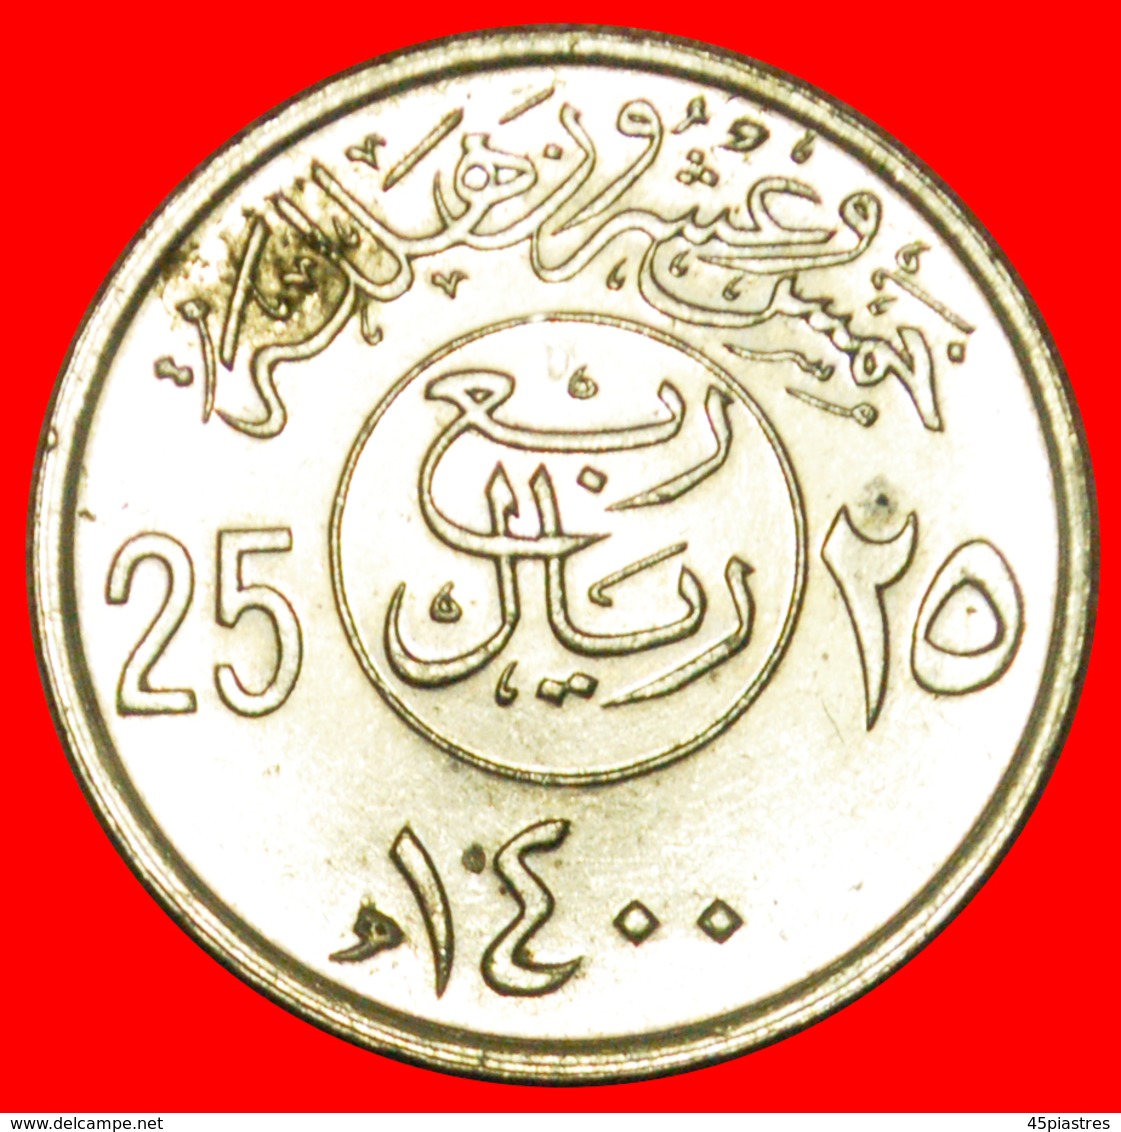 # DAGGERS AND PALMTREE: SAUDI ARABIA ★ 25 HALALA / 1/4  RIYAL 1400 (1980) MINT LUSTER! LOW START ★ NO RESERVE! - Arabia Saudita